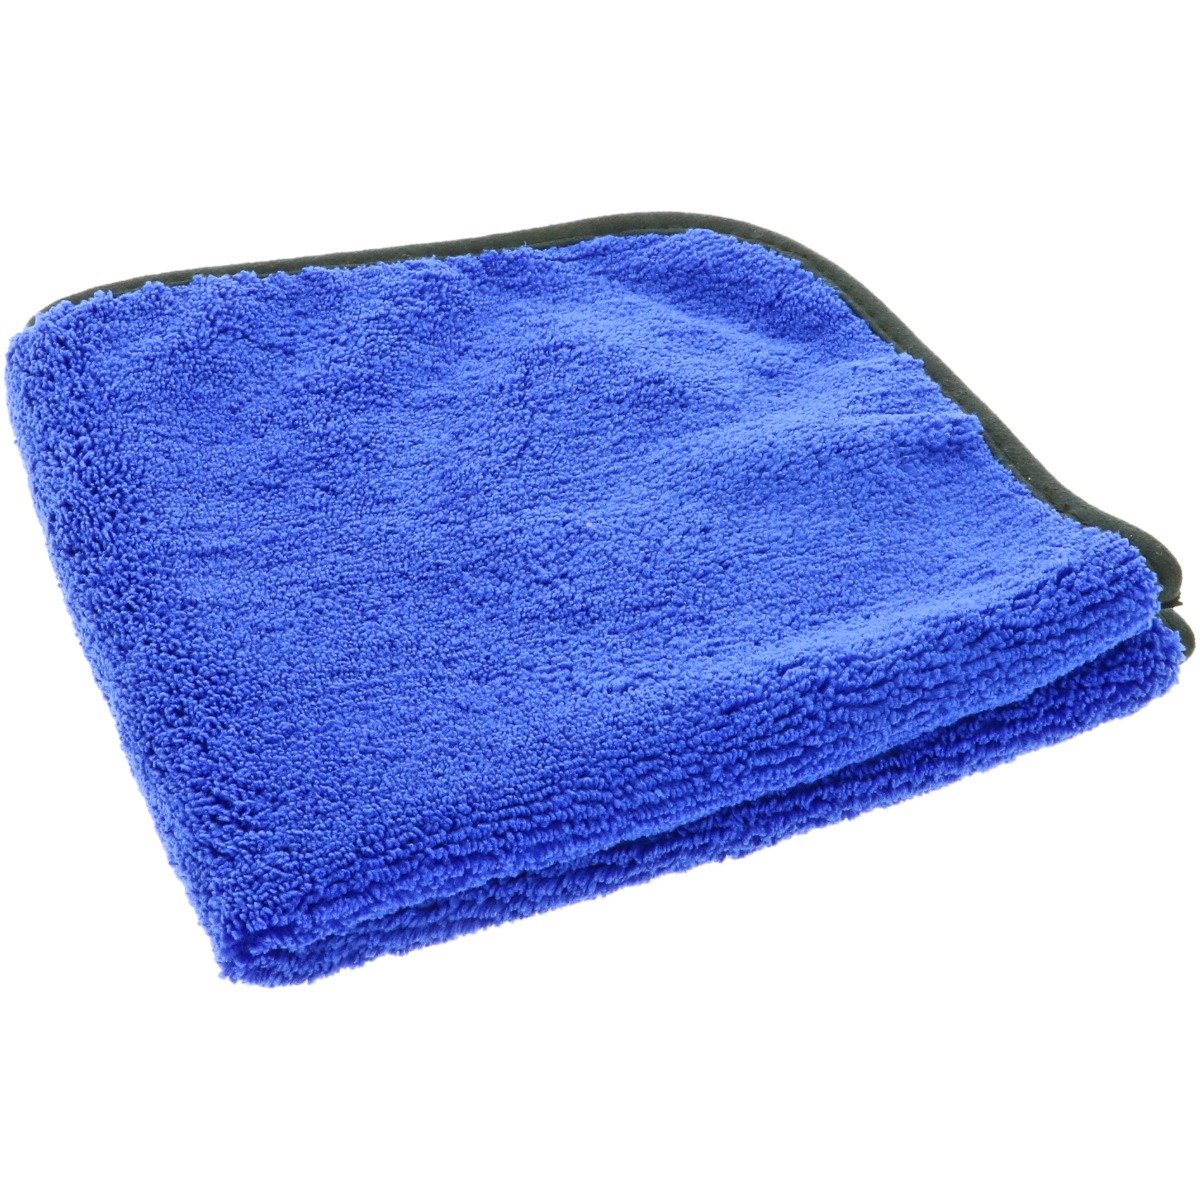 Spectrum 420 Dual-Pile Microfiber Towel - 41x41cm-Spectrum Blue